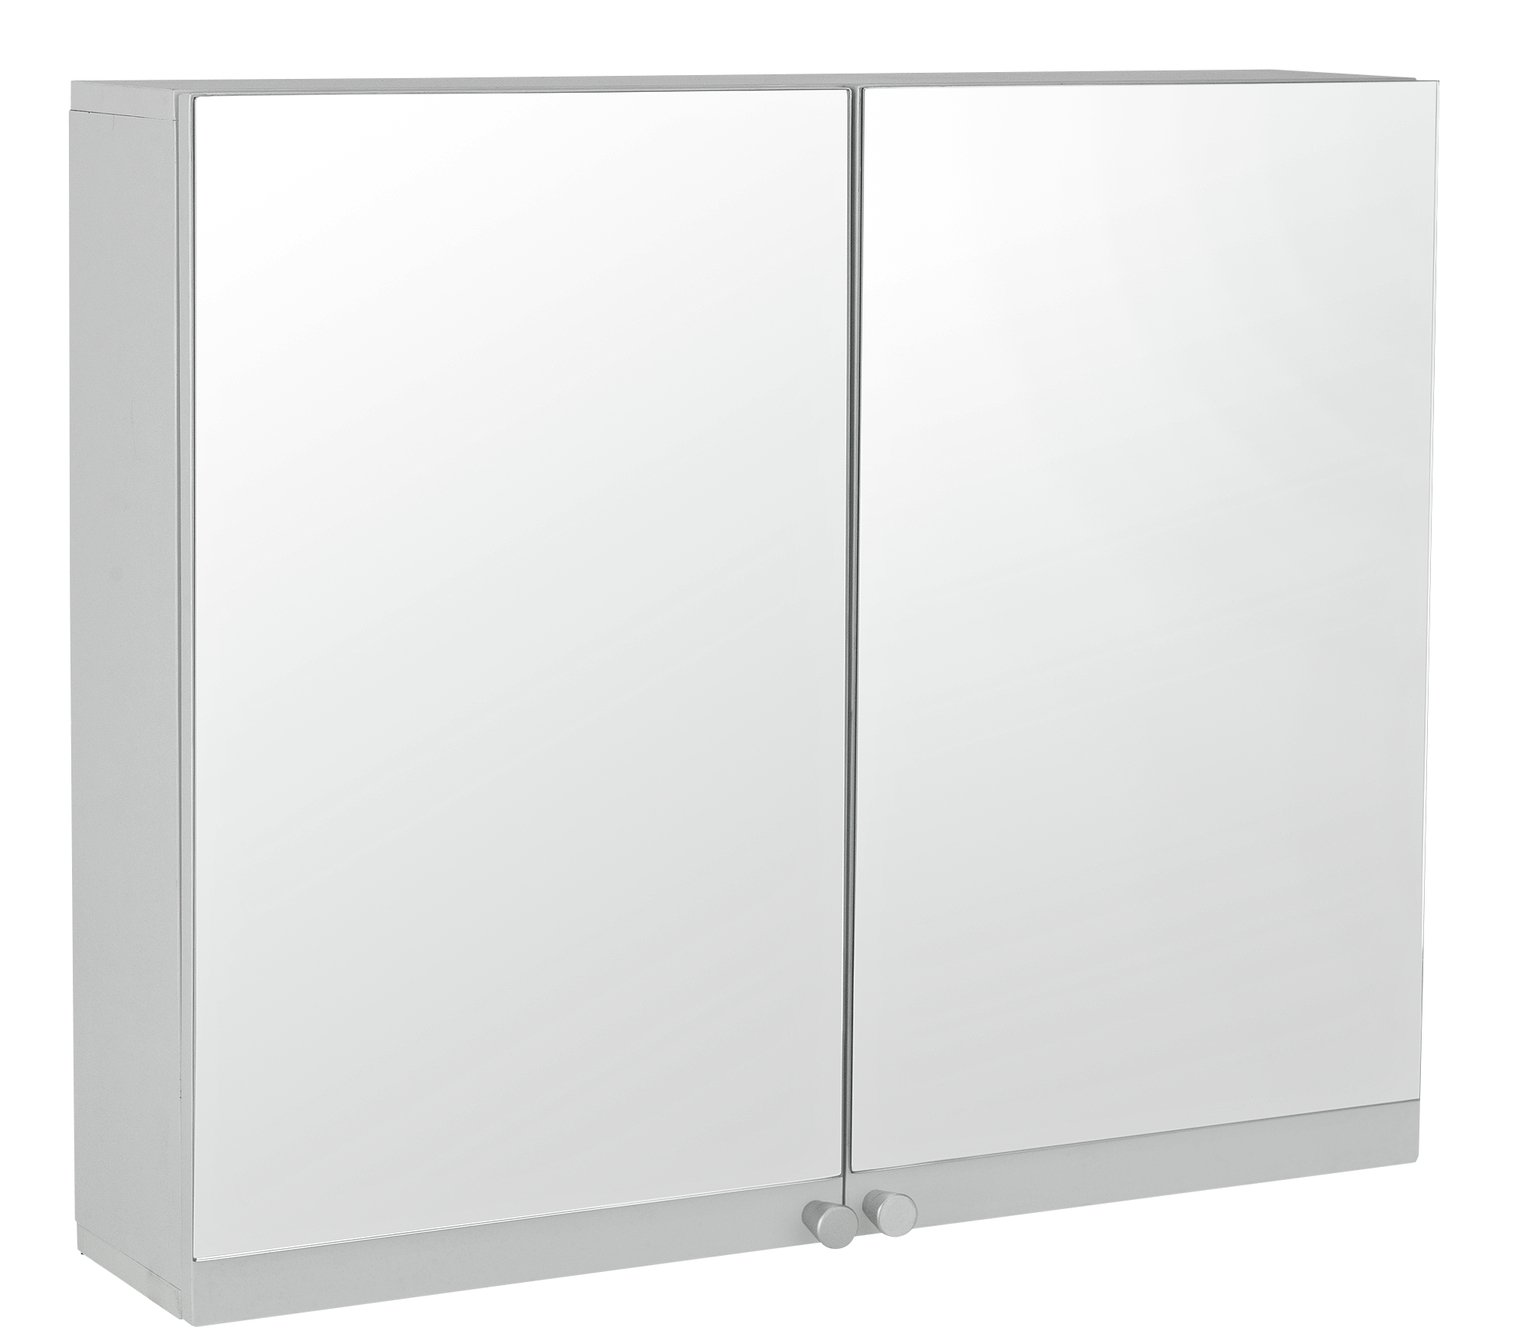 Argos Home Prime 2 Door Mirrored Cabinet - White